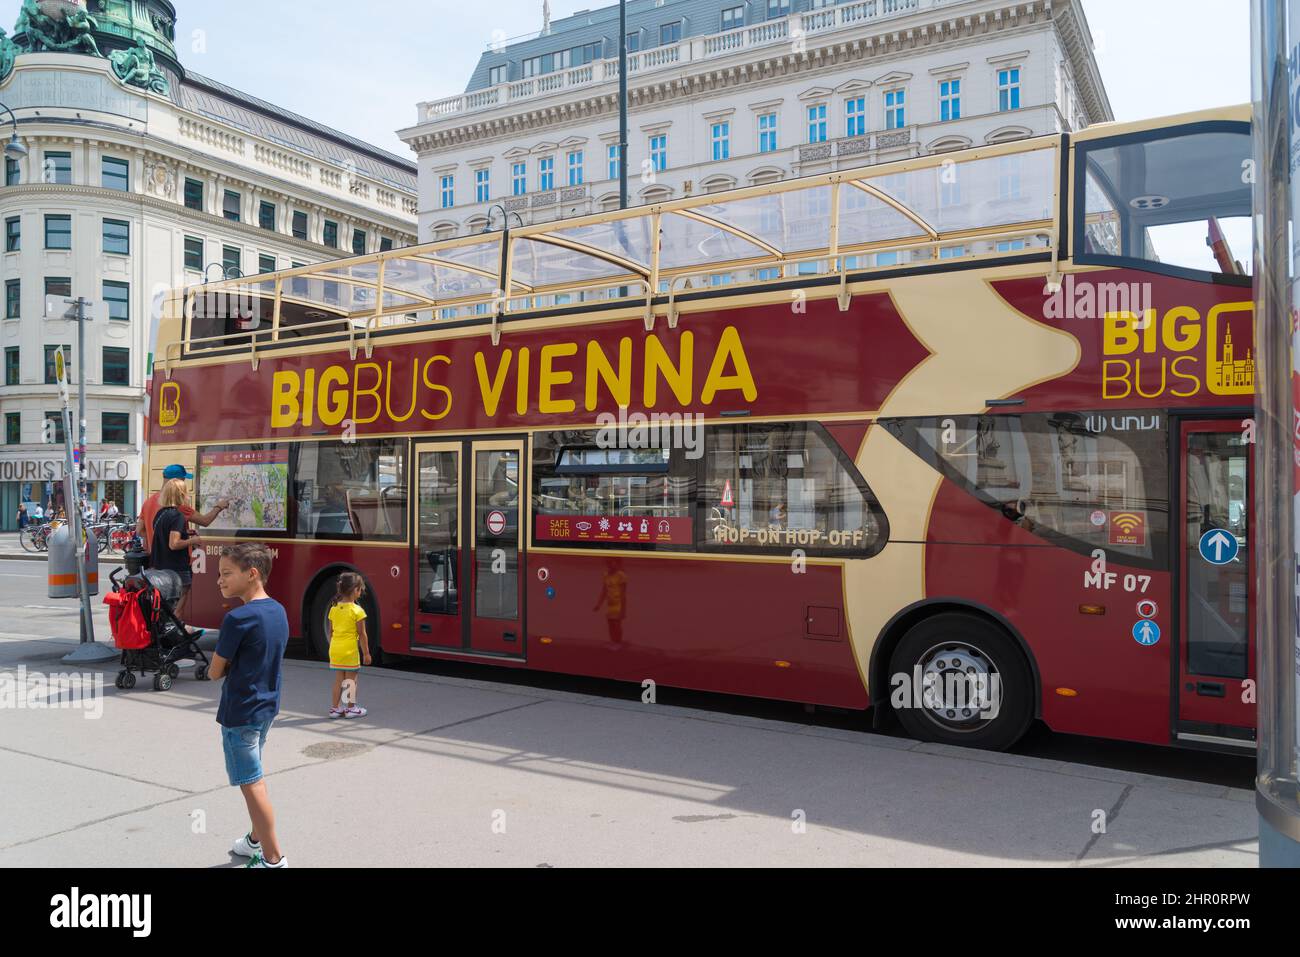 VIENNA, AUSTRIA - JULY 26, 2020: Bigbus sightseeing bus in Vienna, the capital of Austria Stock Photo